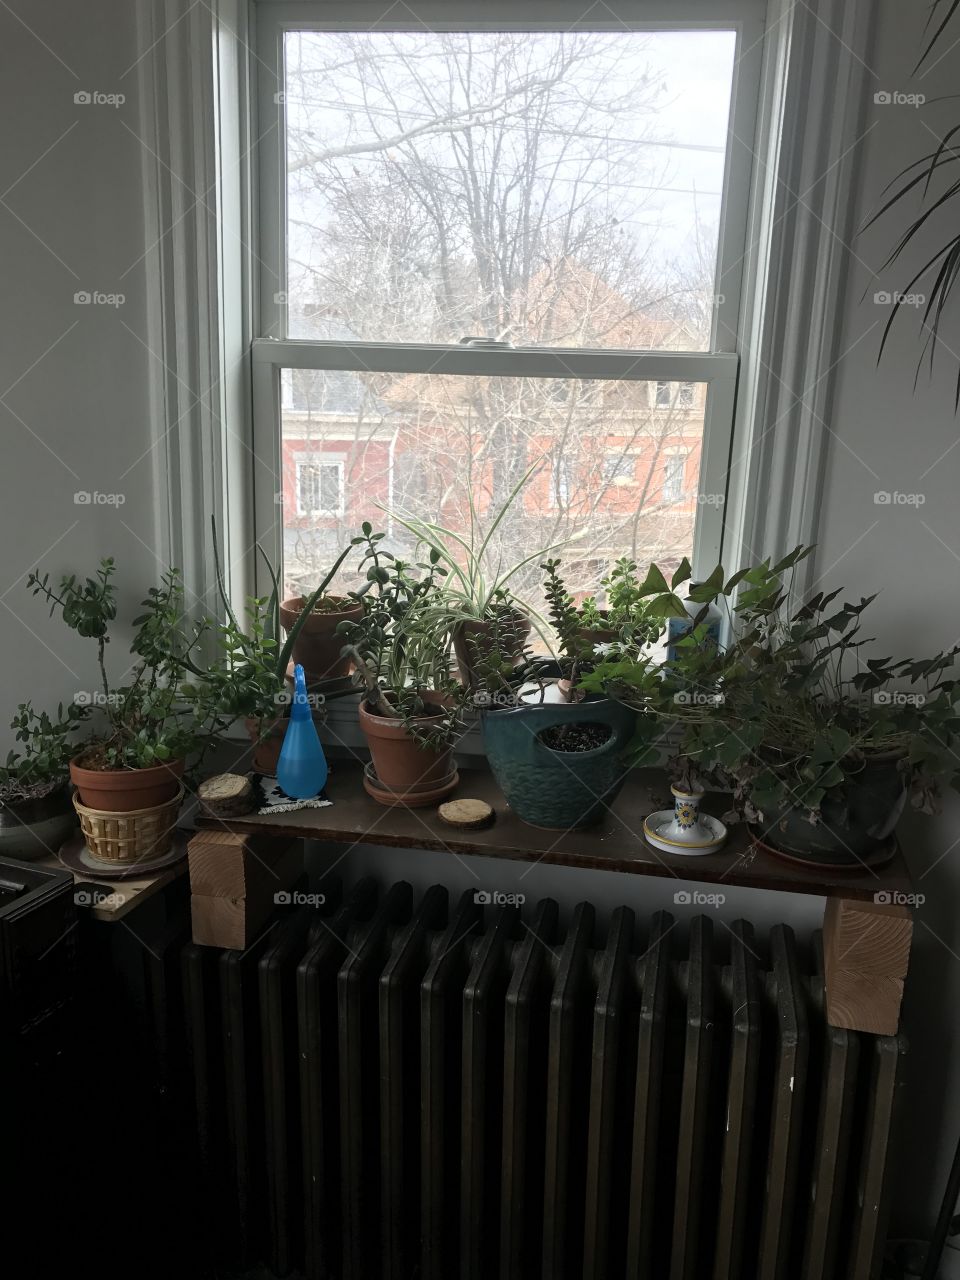 Airbnb plants 